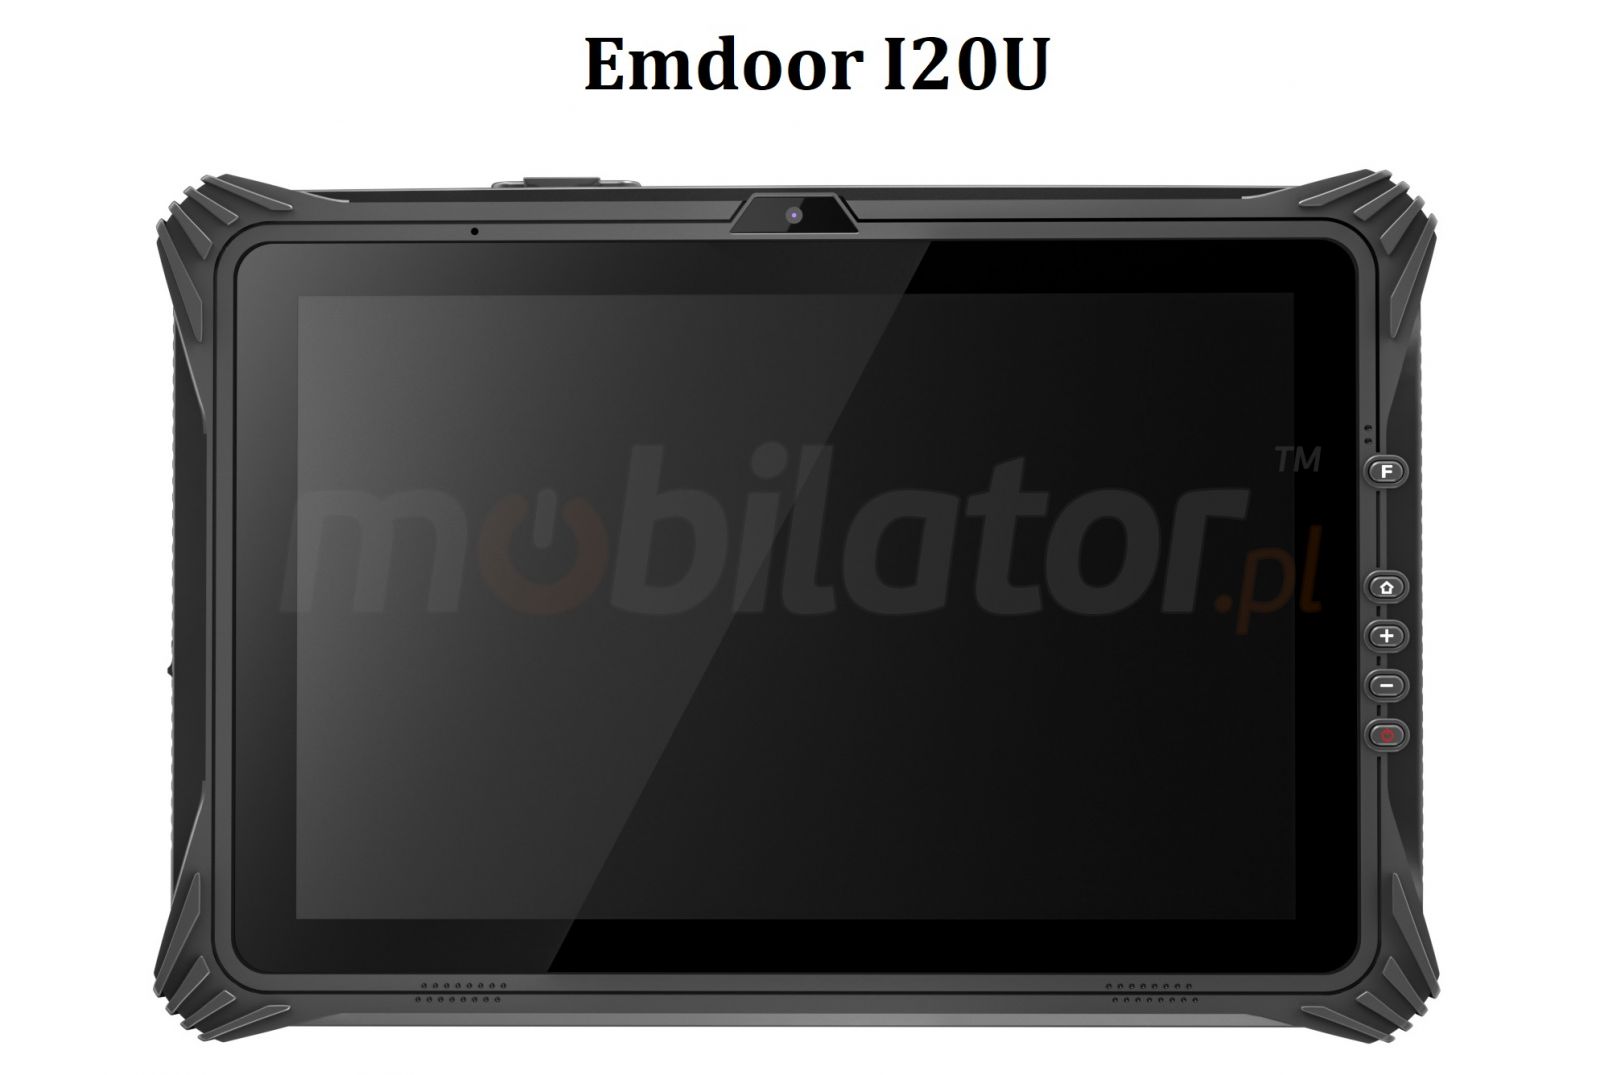 Emdoor I20U v.13 - Drop-proof 12.2 inch tablet with Windows 10 Home, 1D MOTO code reader, NFC, 4G, 8GB RAM and 128GB ROM, Bluetooth 4.2 